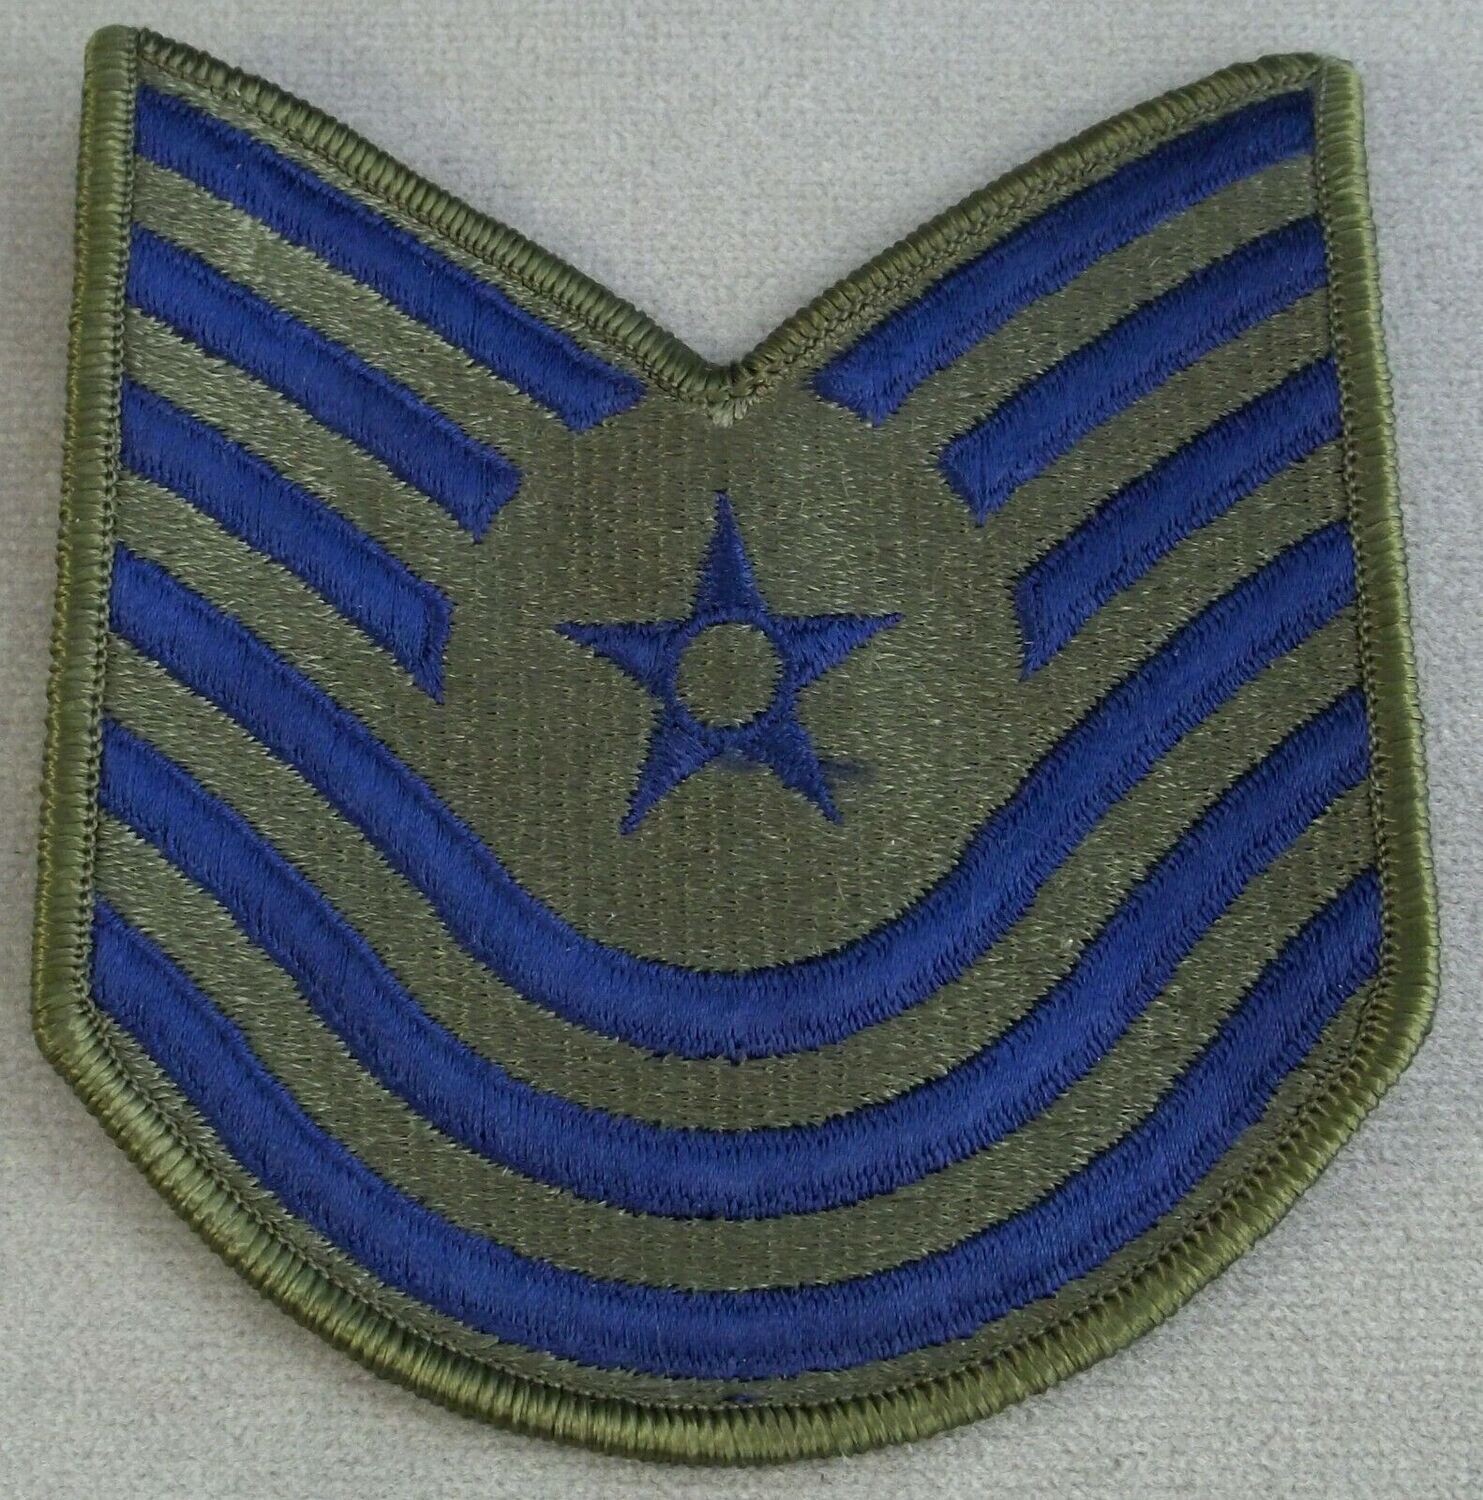 American U.S Air Force Insignia Master Sergeant Rank Stripes Patch Badge